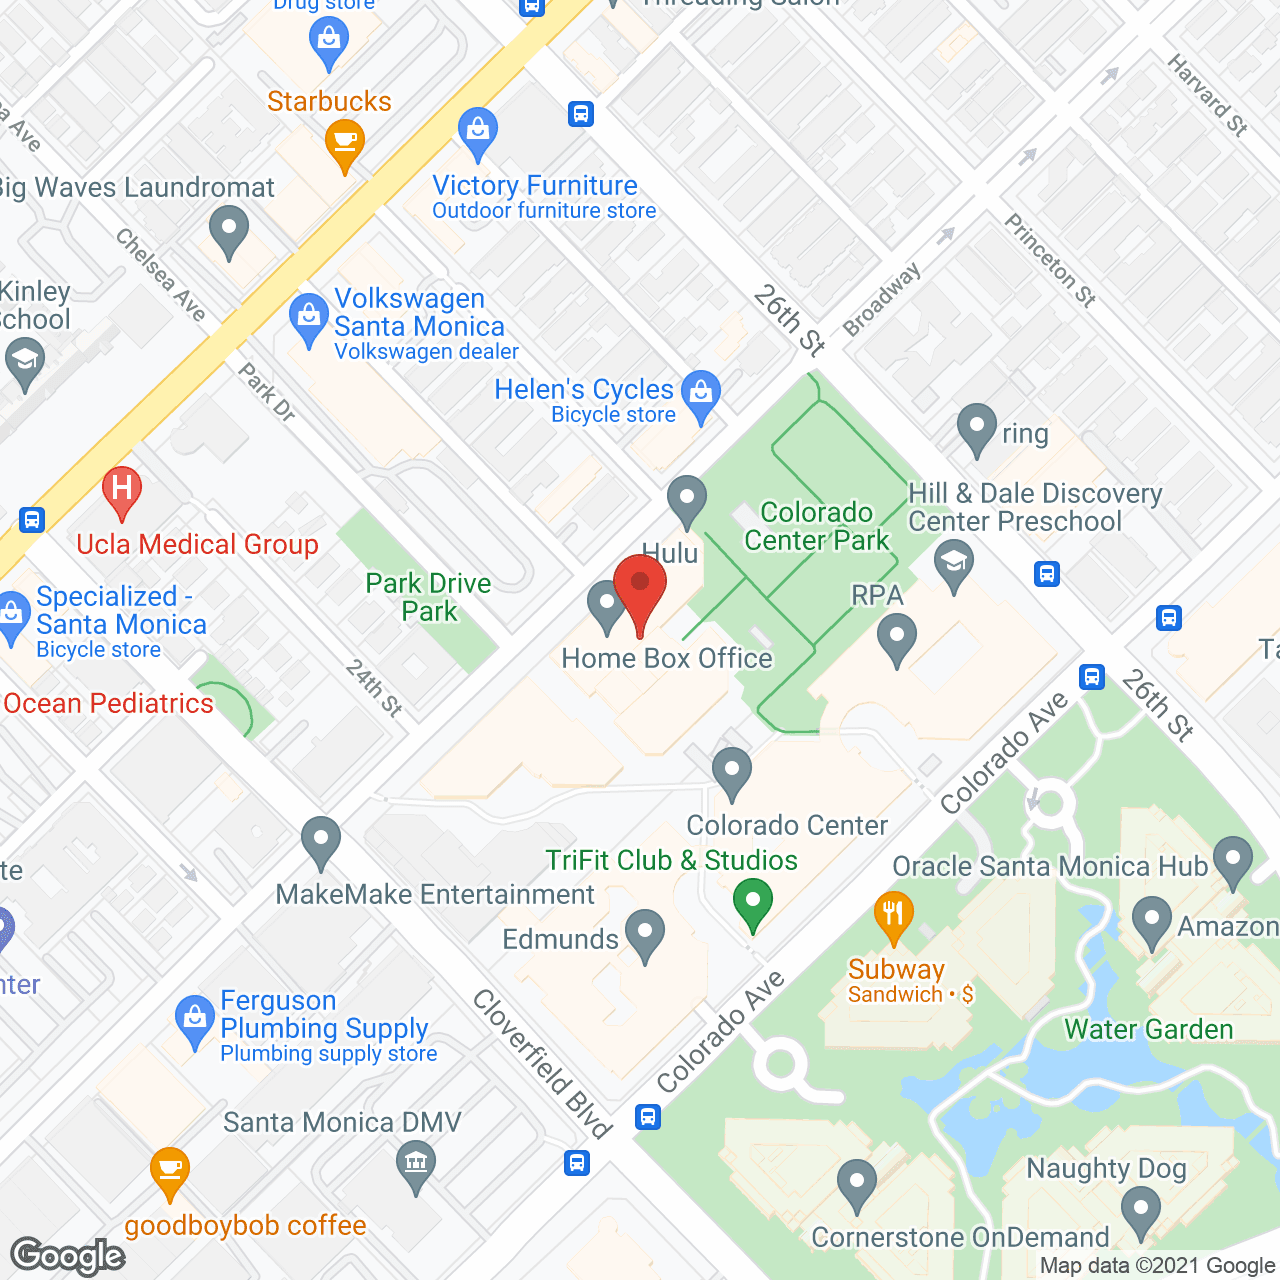 TheKey of Santa Monica, CA in google map